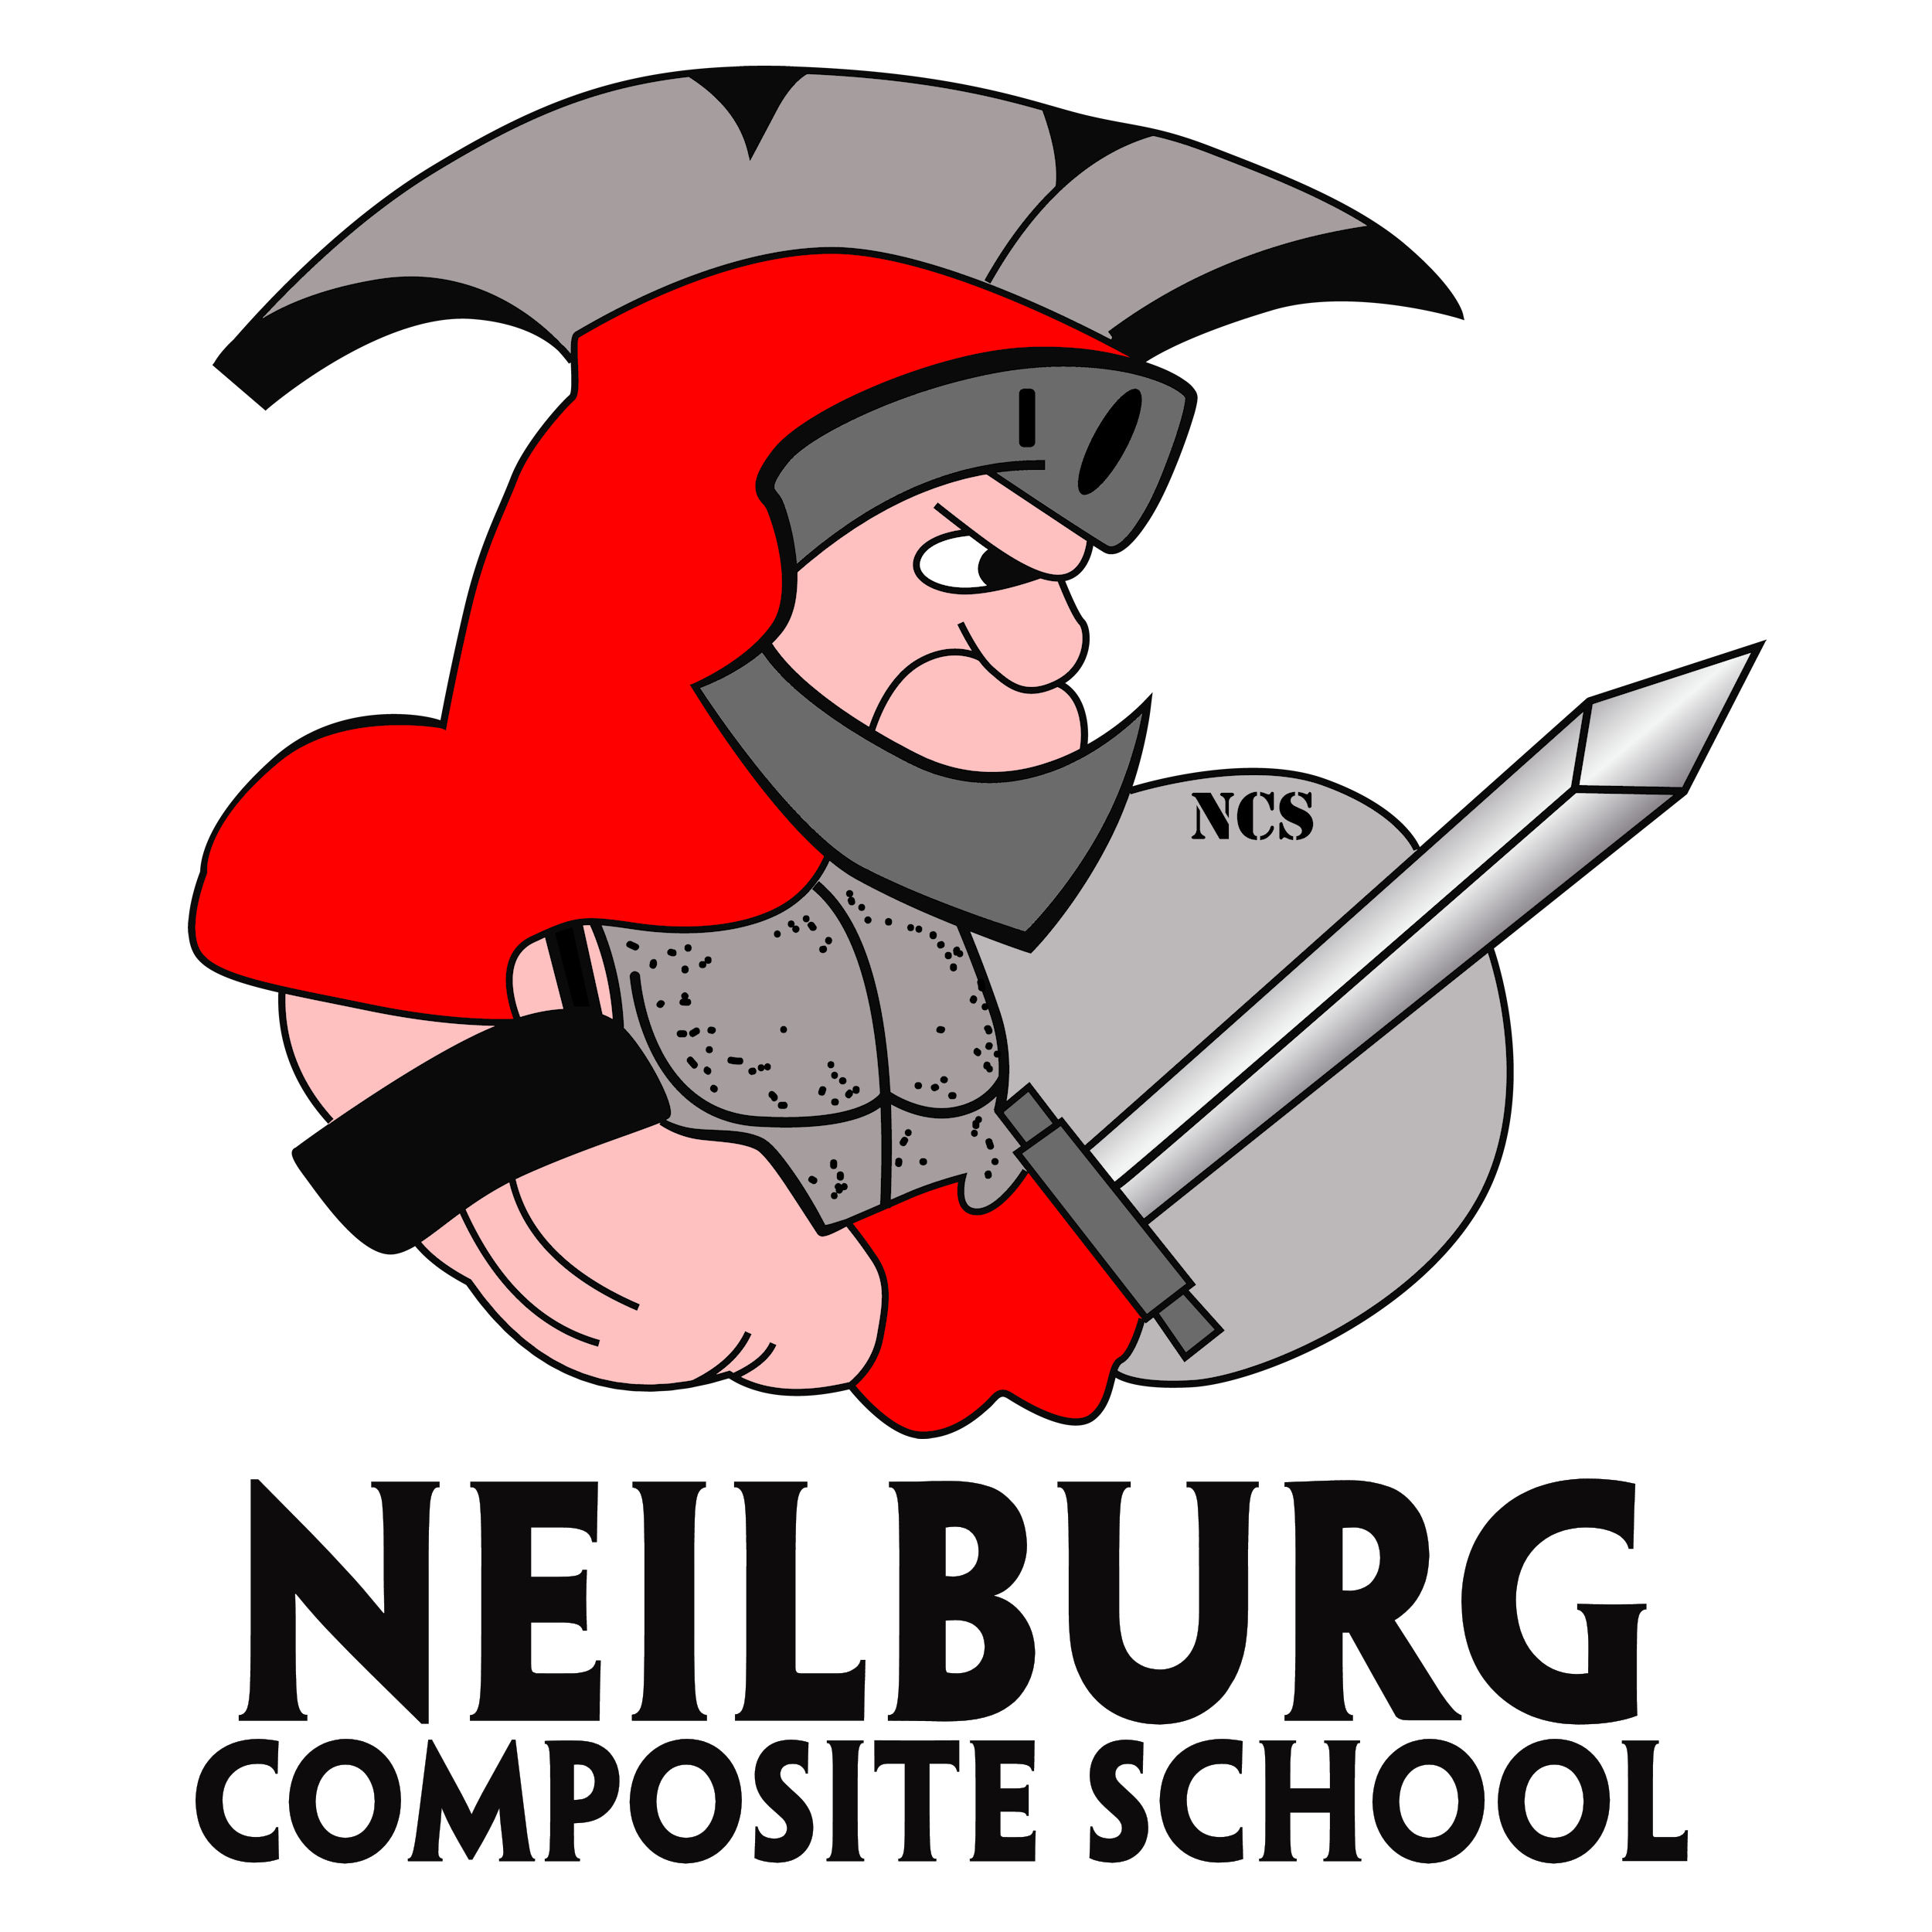 Welcome to the Neilburg Composite School Website!